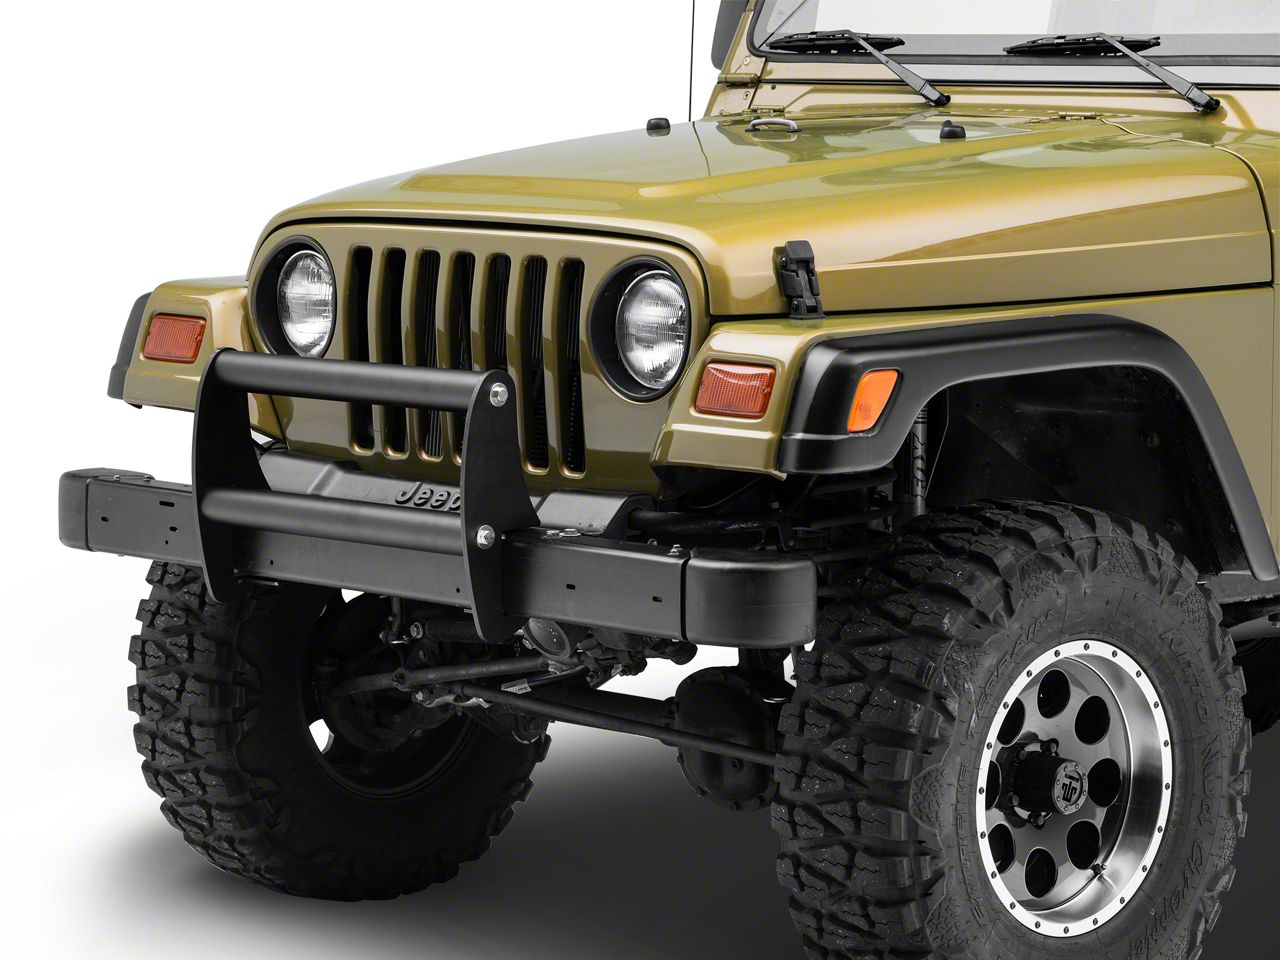 STEEL Rear Multi-Point Tie Down Rails Mount Frame for Jeep Wrangler TJ 97-06